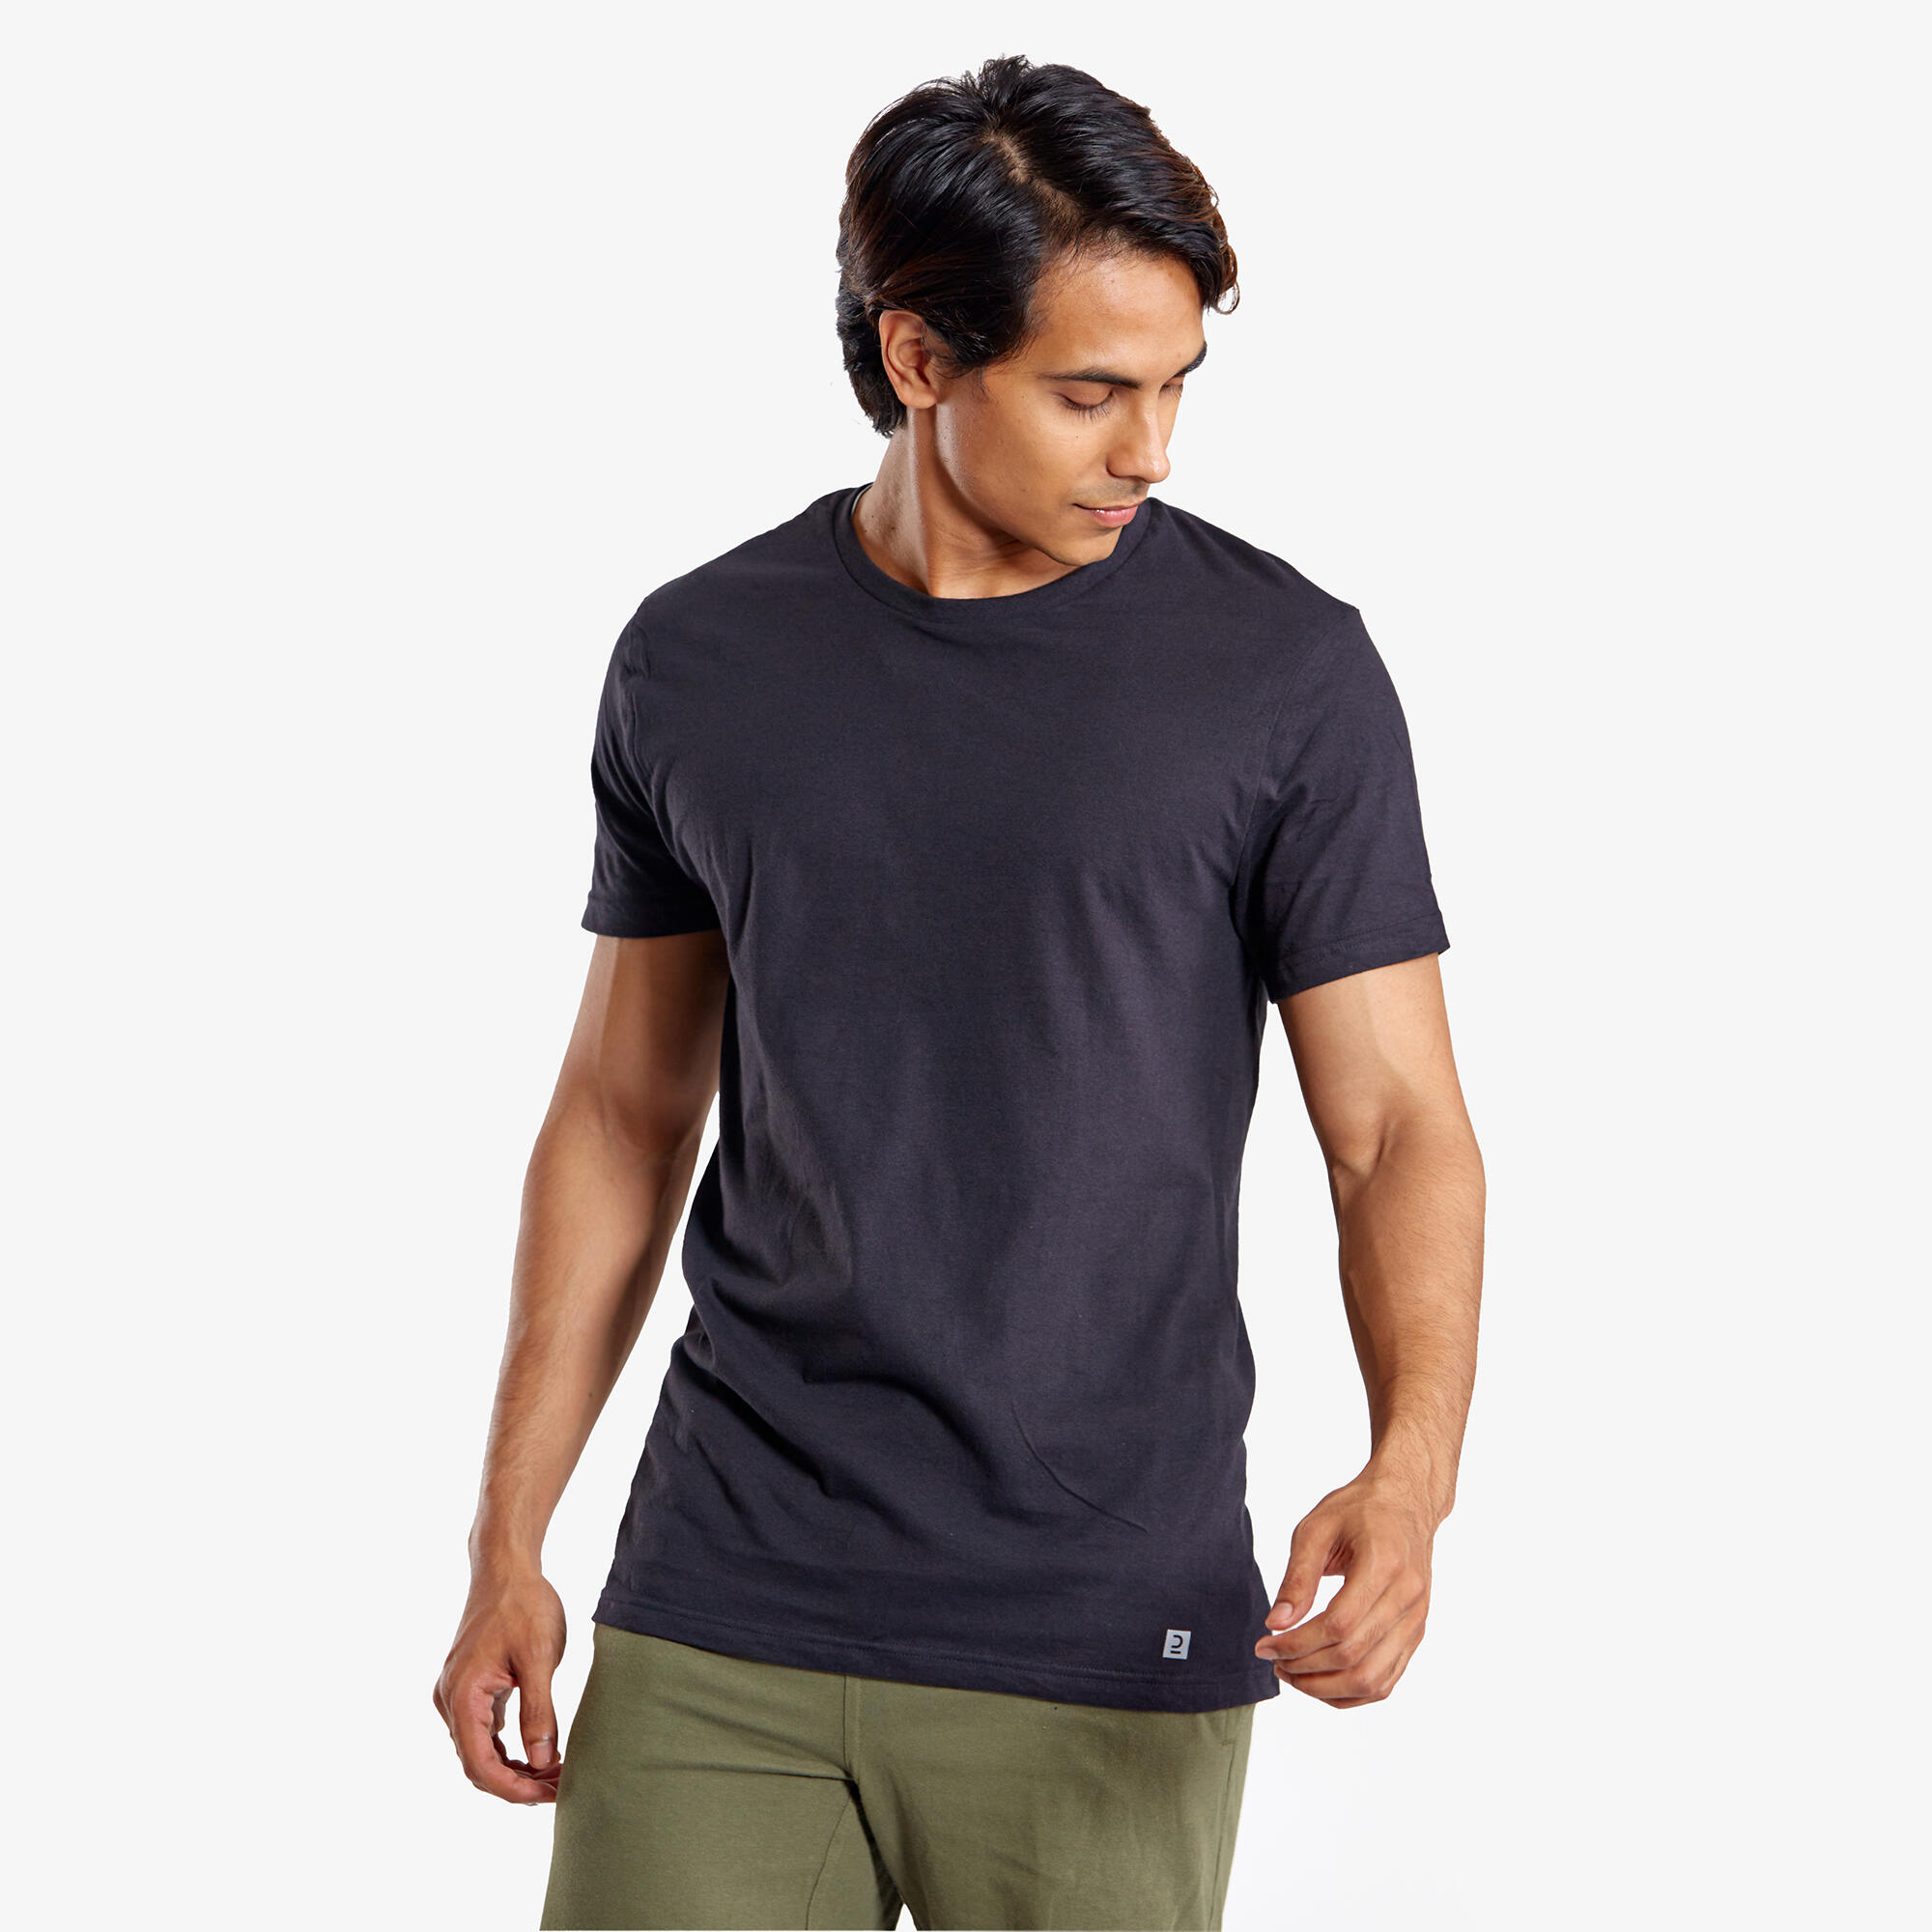 REI Co-op Sahara T-Shirt - Men's | REI Co-op